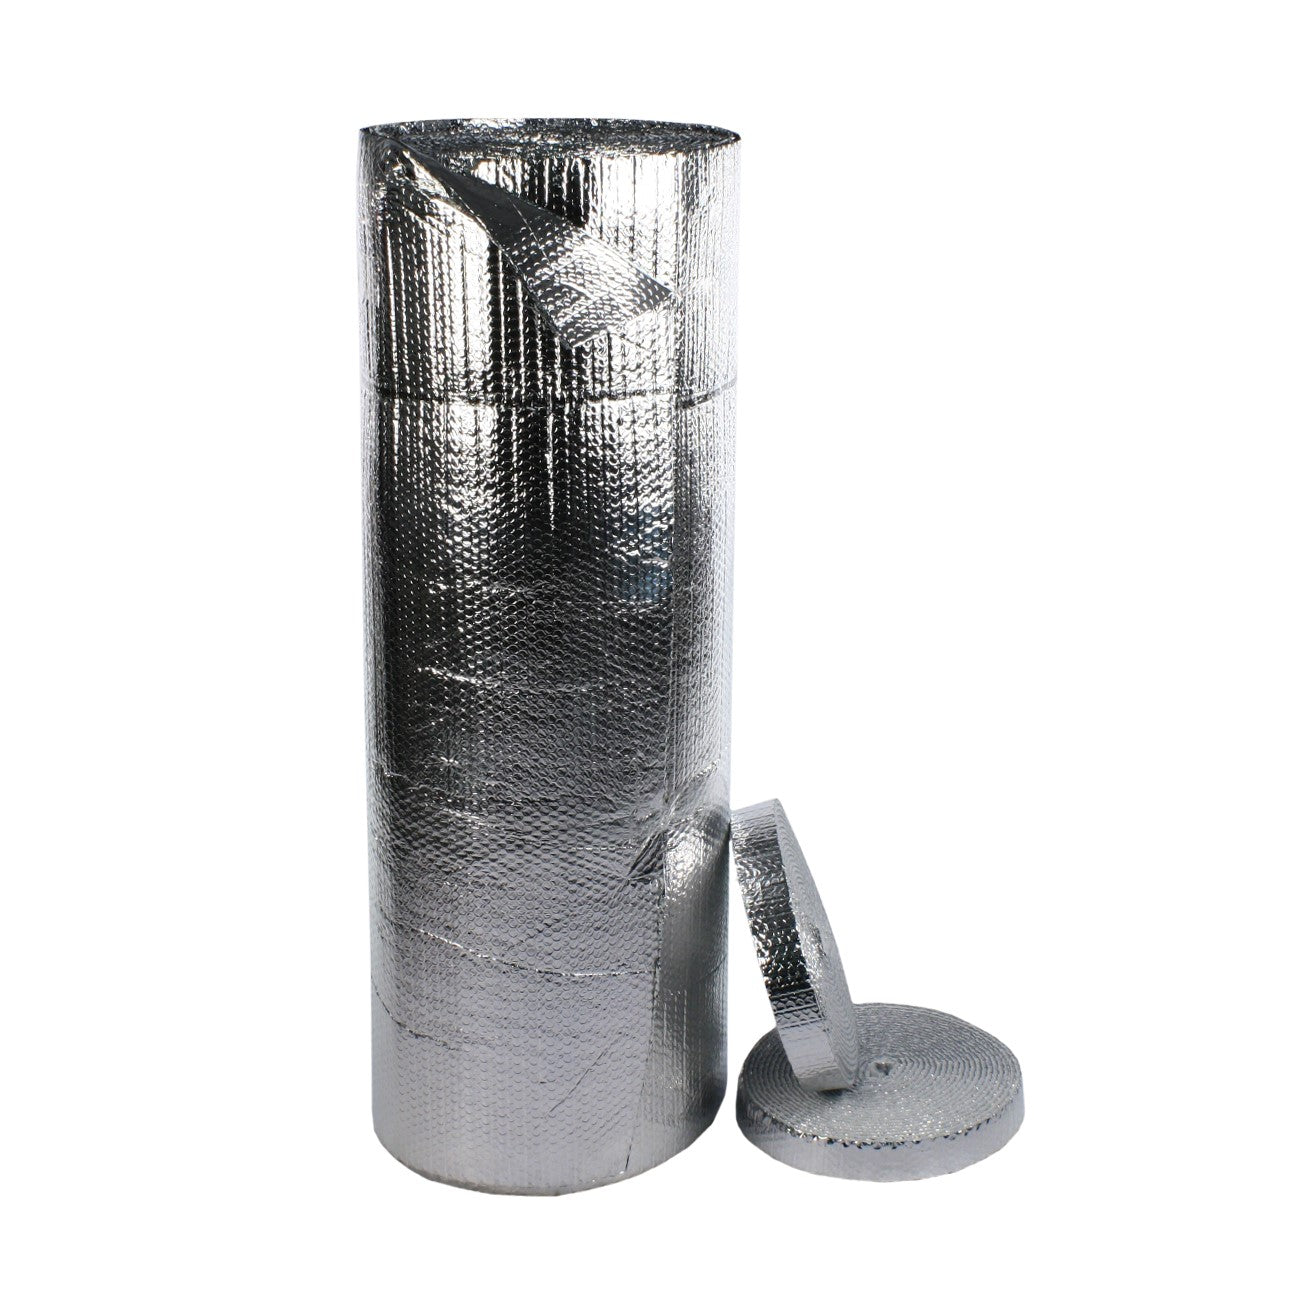 R-8 HVAC Duct Wrap Insulation - 4' x 50' (200 Sq Ft)